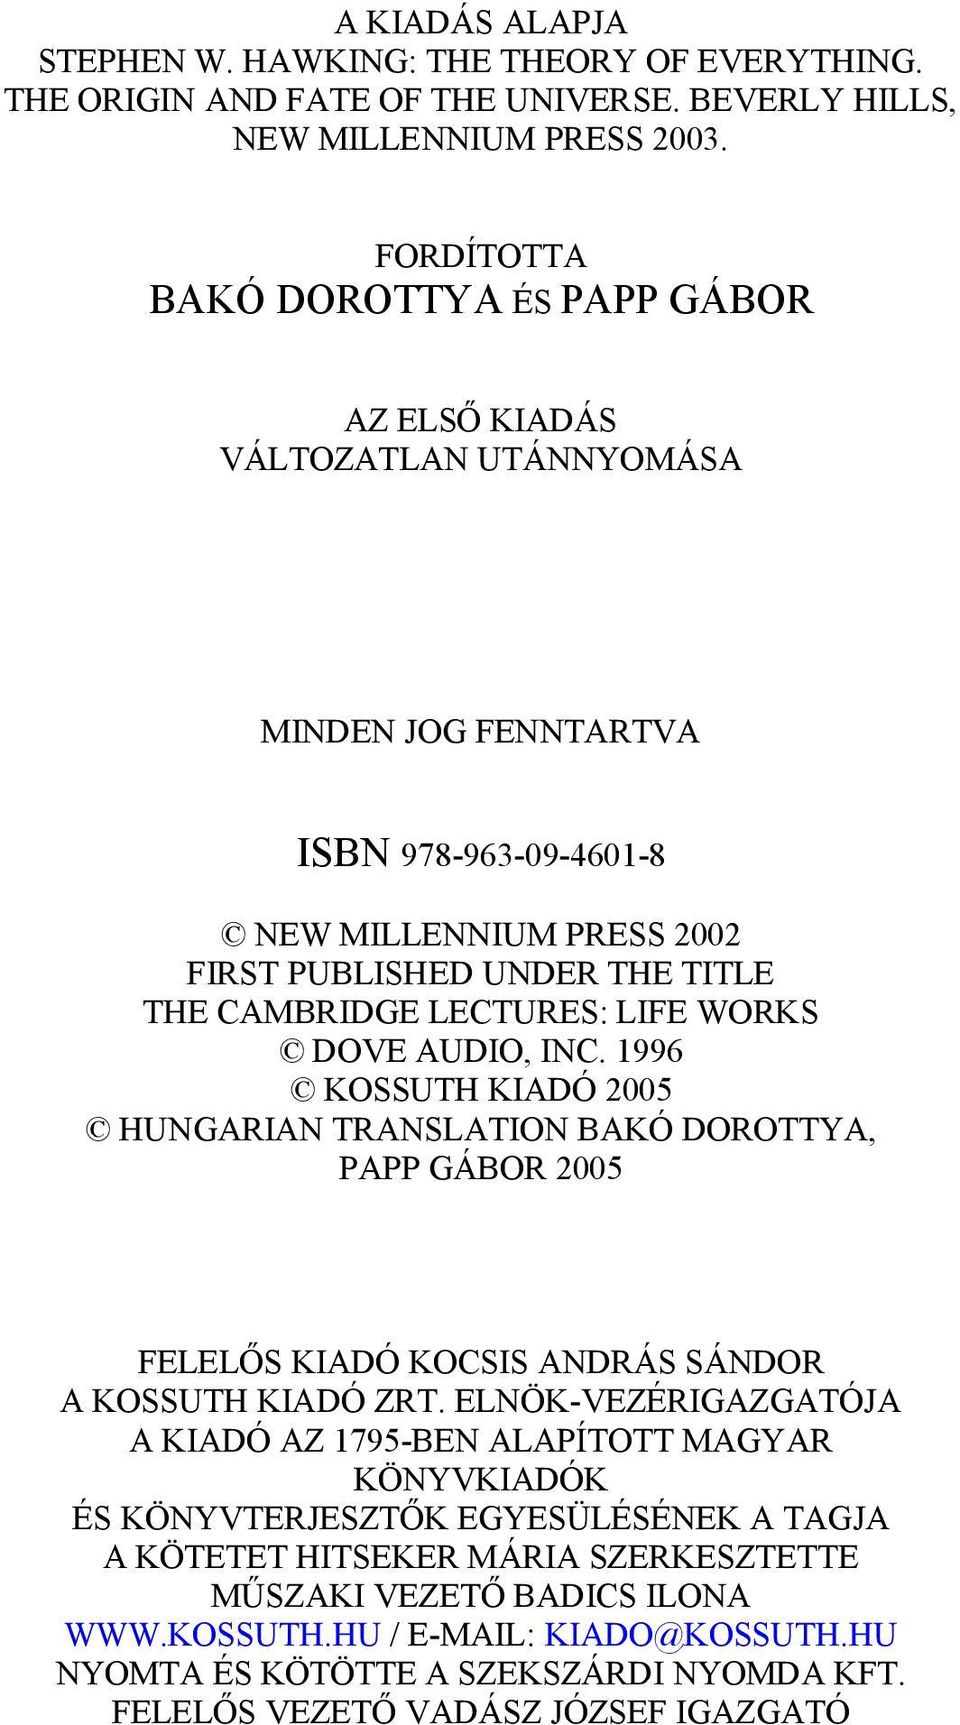 LECTURES: LIFE WORKS DOVE AUDIO, INC. 1996 KOSSUTH KIADÓ 2005 HUNGARIAN TRANSLATION BAKÓ DOROTTYA, PAPP GÁBOR 2005 FELELŐS KIADÓ KOCSIS ANDRÁS SÁNDOR A KOSSUTH KIADÓ ZRT.